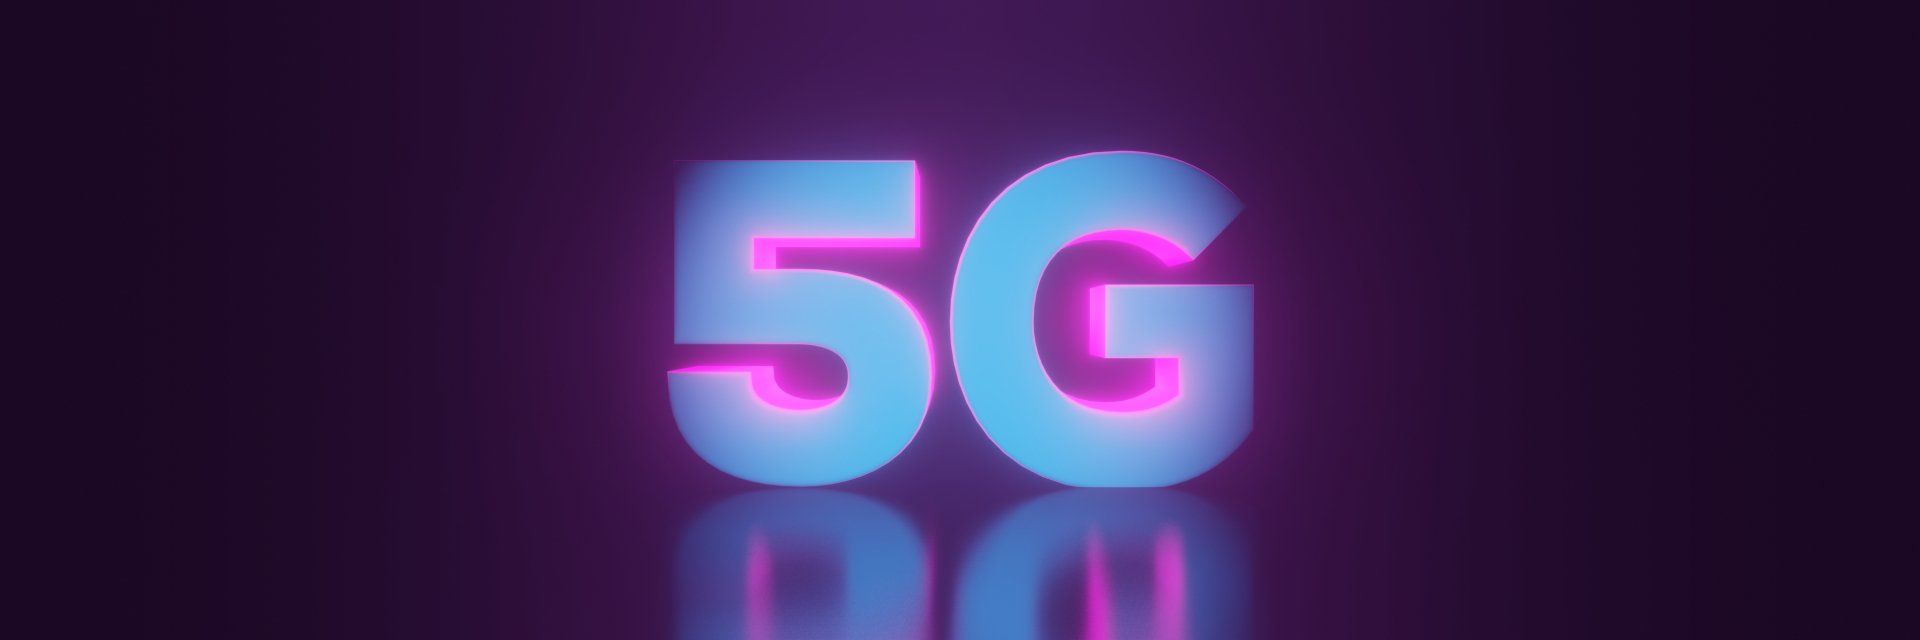 Neon 5G text on black background